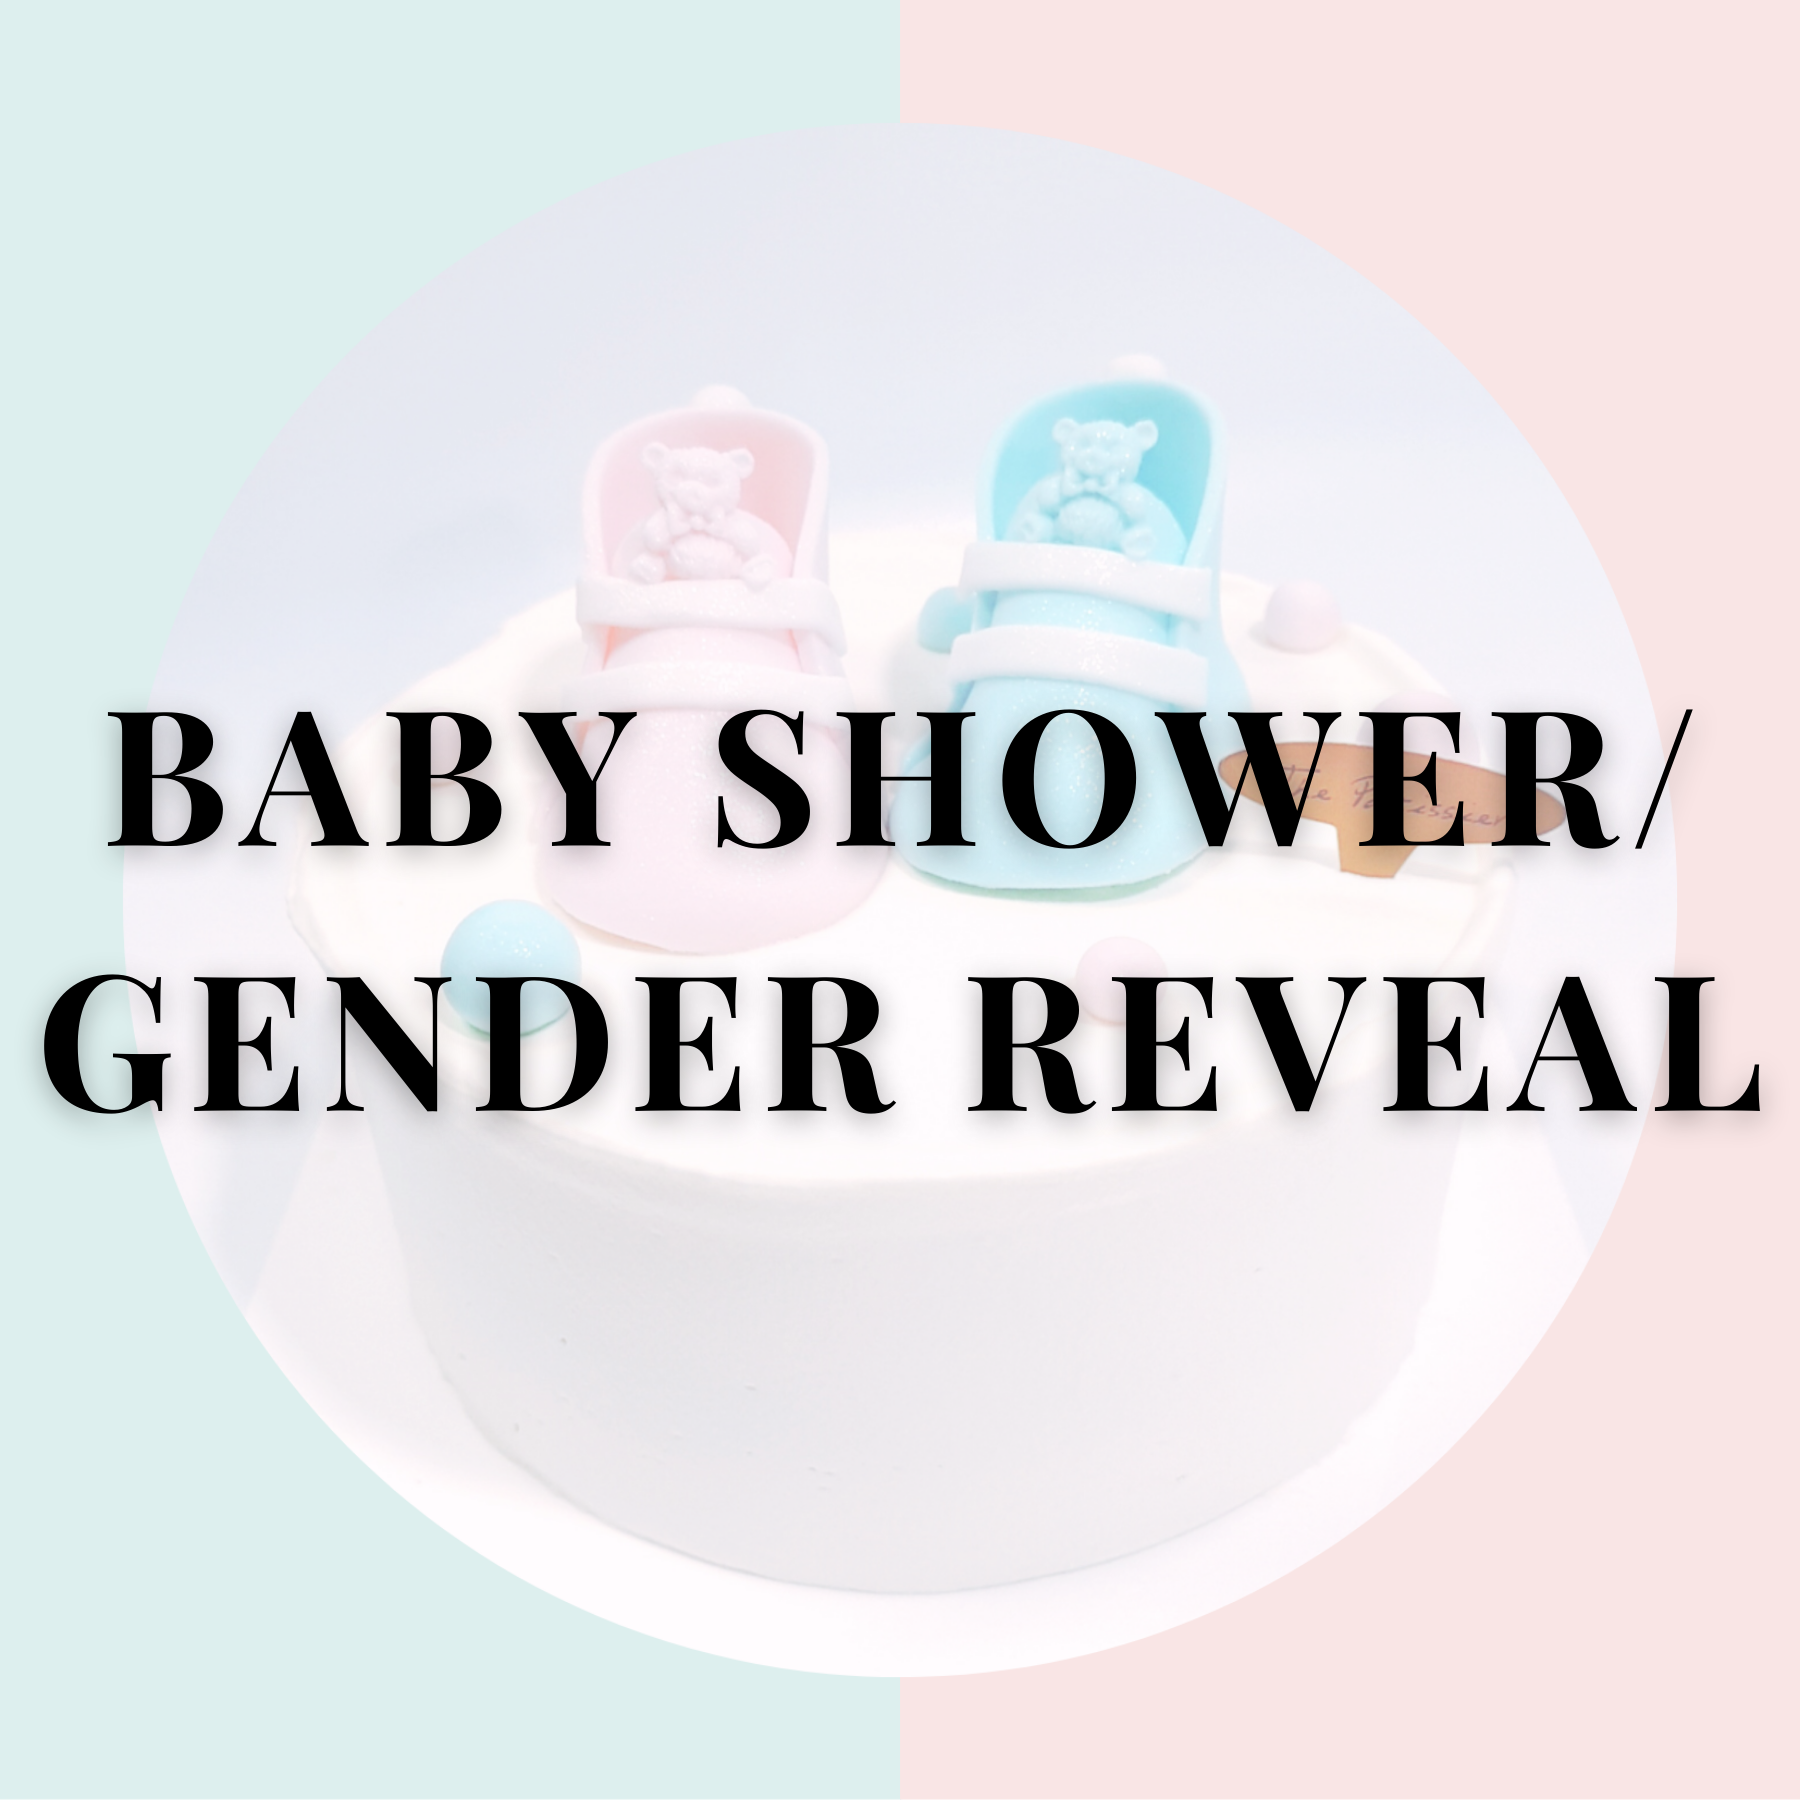 Baby Shower/Gender Reveal 